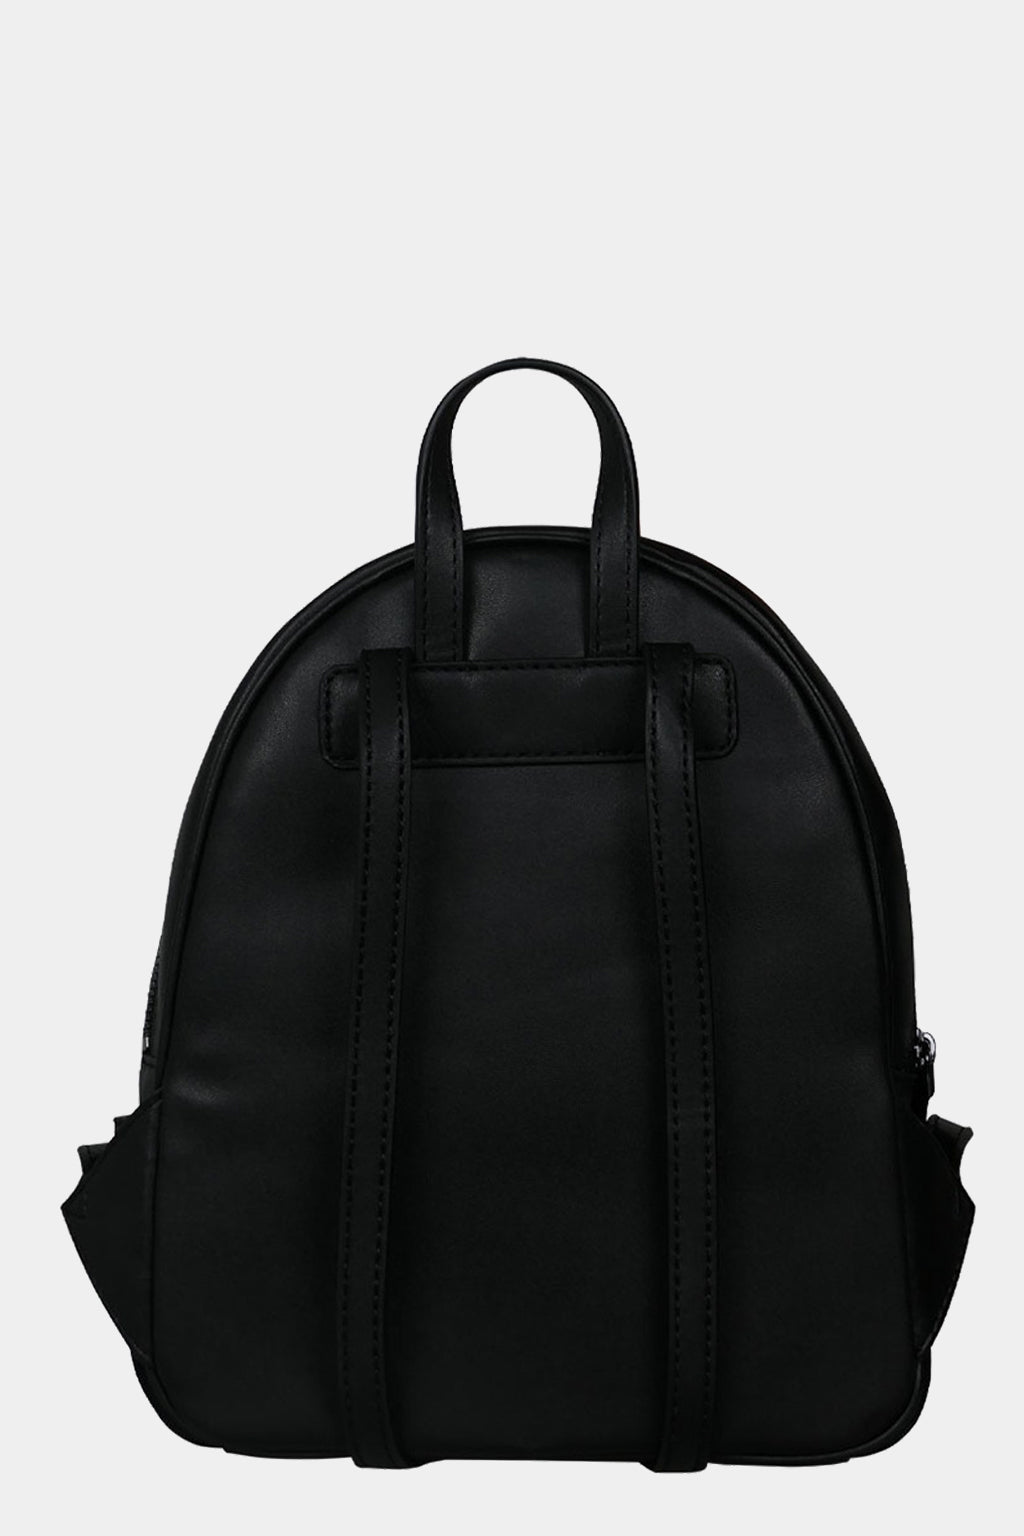 Guess - Marsali Backpack Black